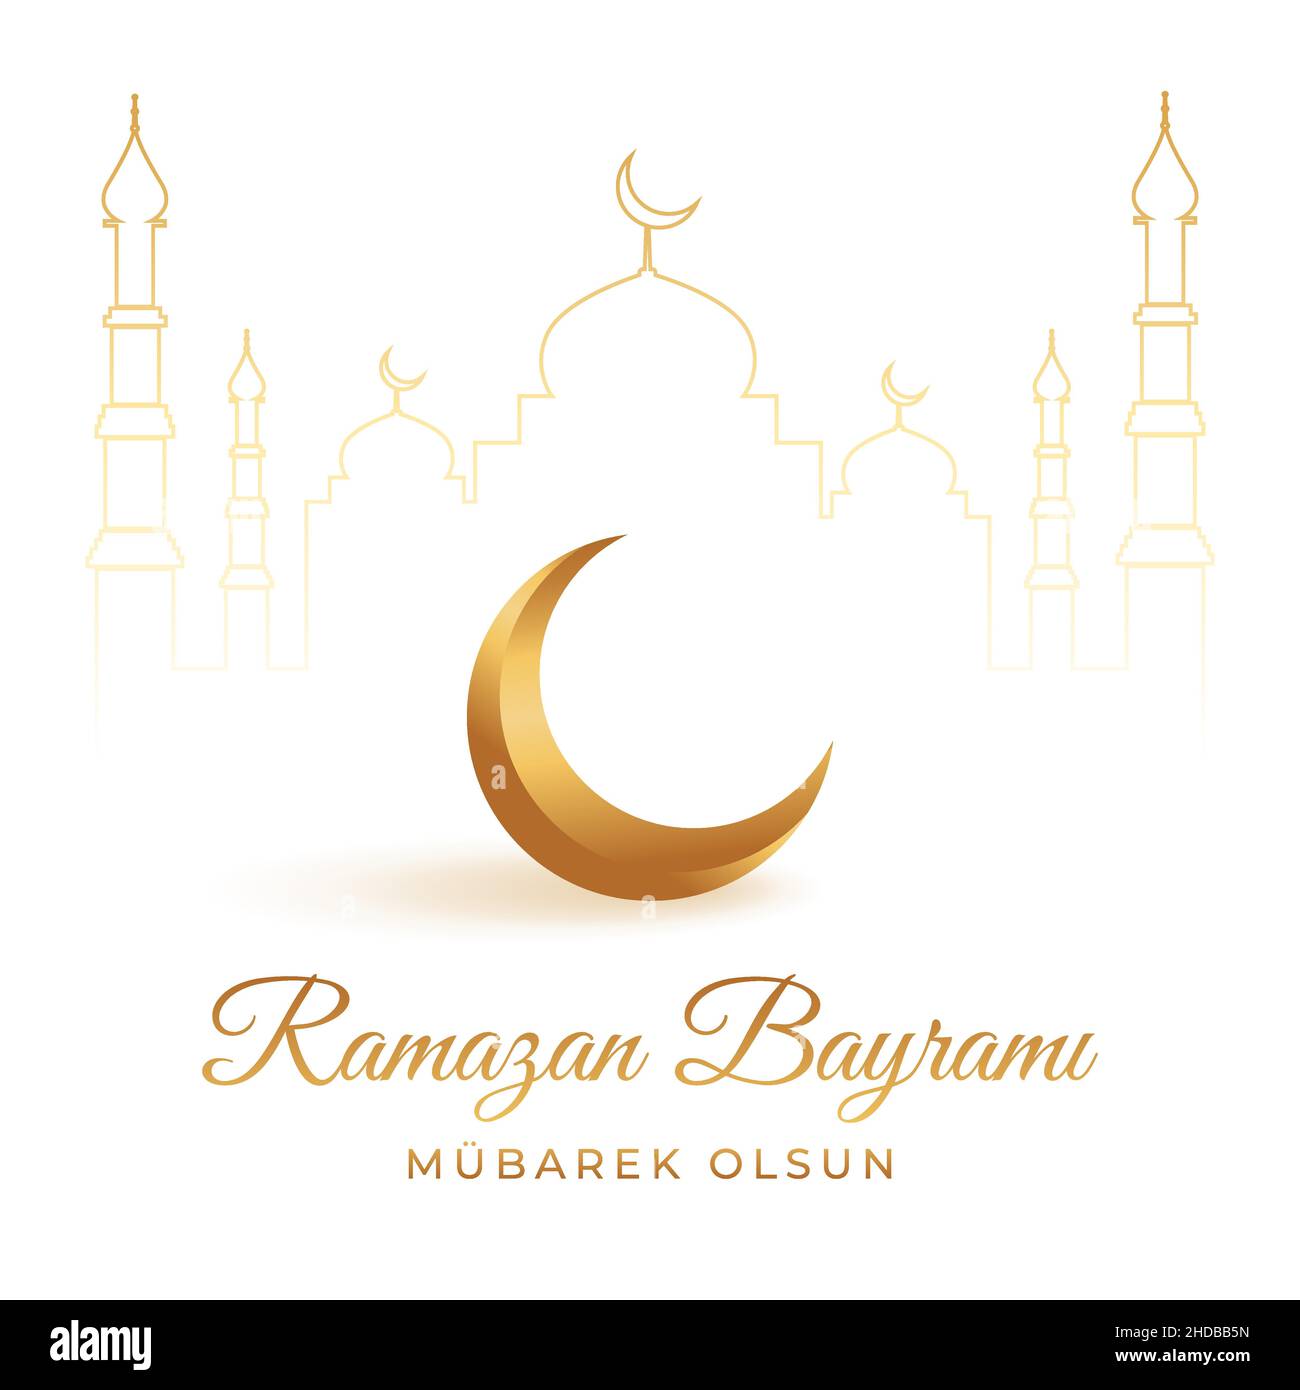 Ramazan Bayrami Mubarek Olsun. Traduzione: EID Mubarak Ramadan. Illustrazione Vettoriale